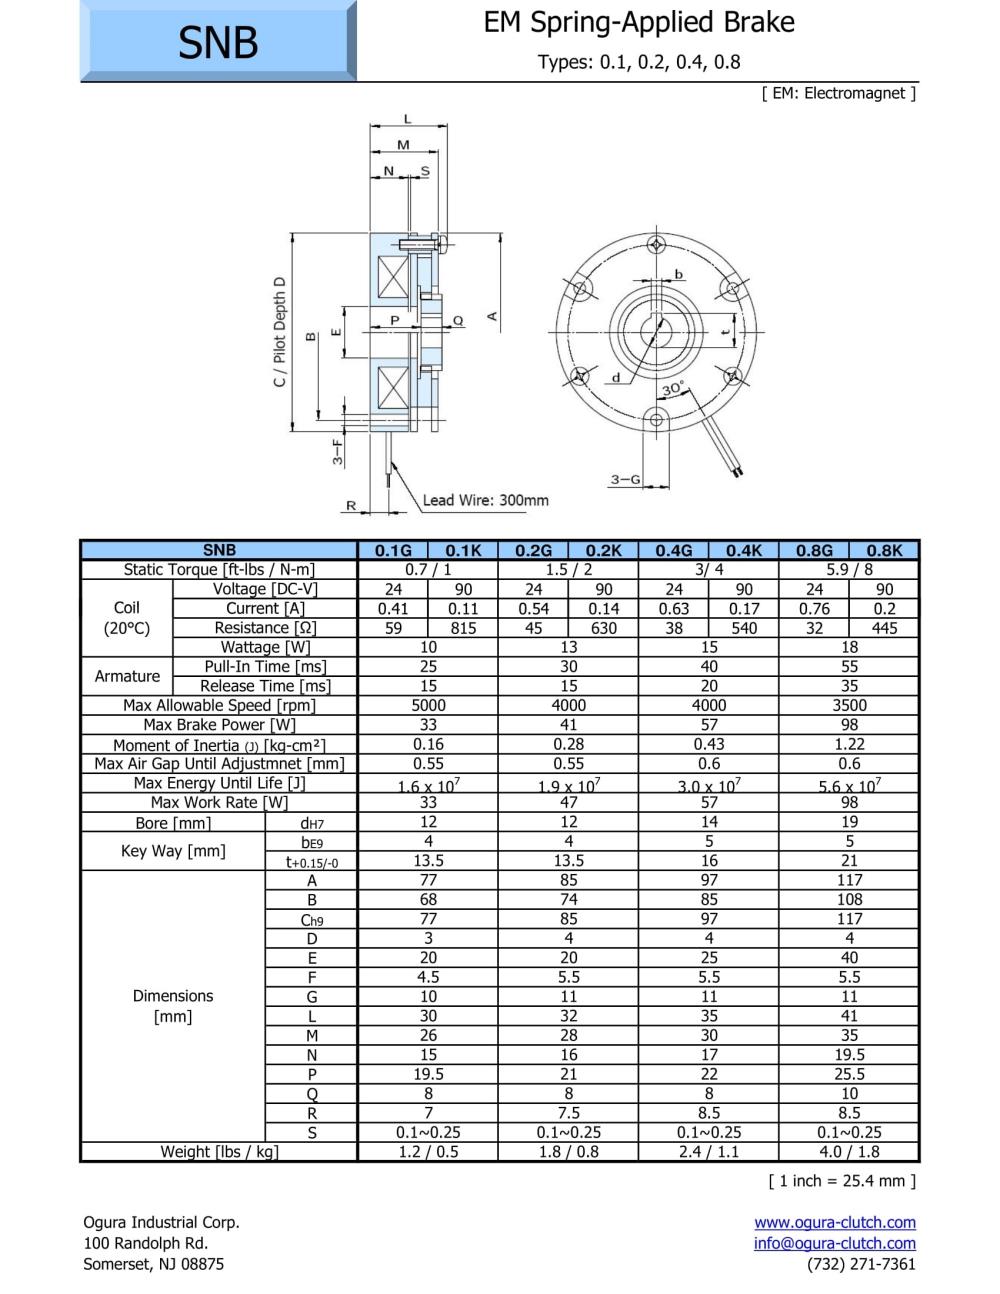 OGURA Electromagnetic Spring-Applied Brake SNB 0.1G, 0.2G, 0.4G, 0.8G Series